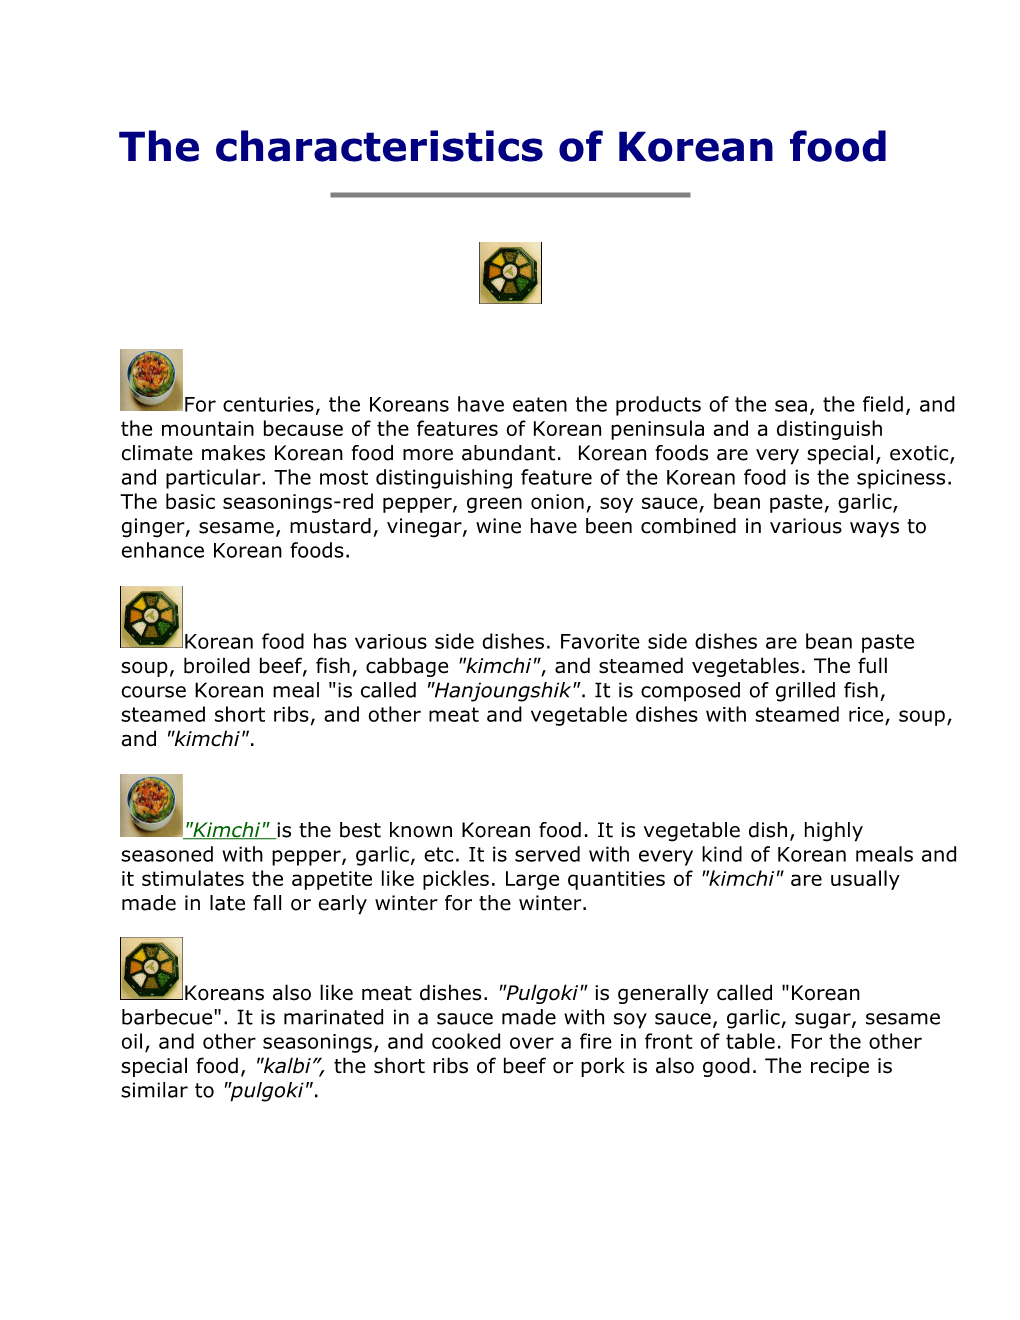 The Characteristics of Korean Food